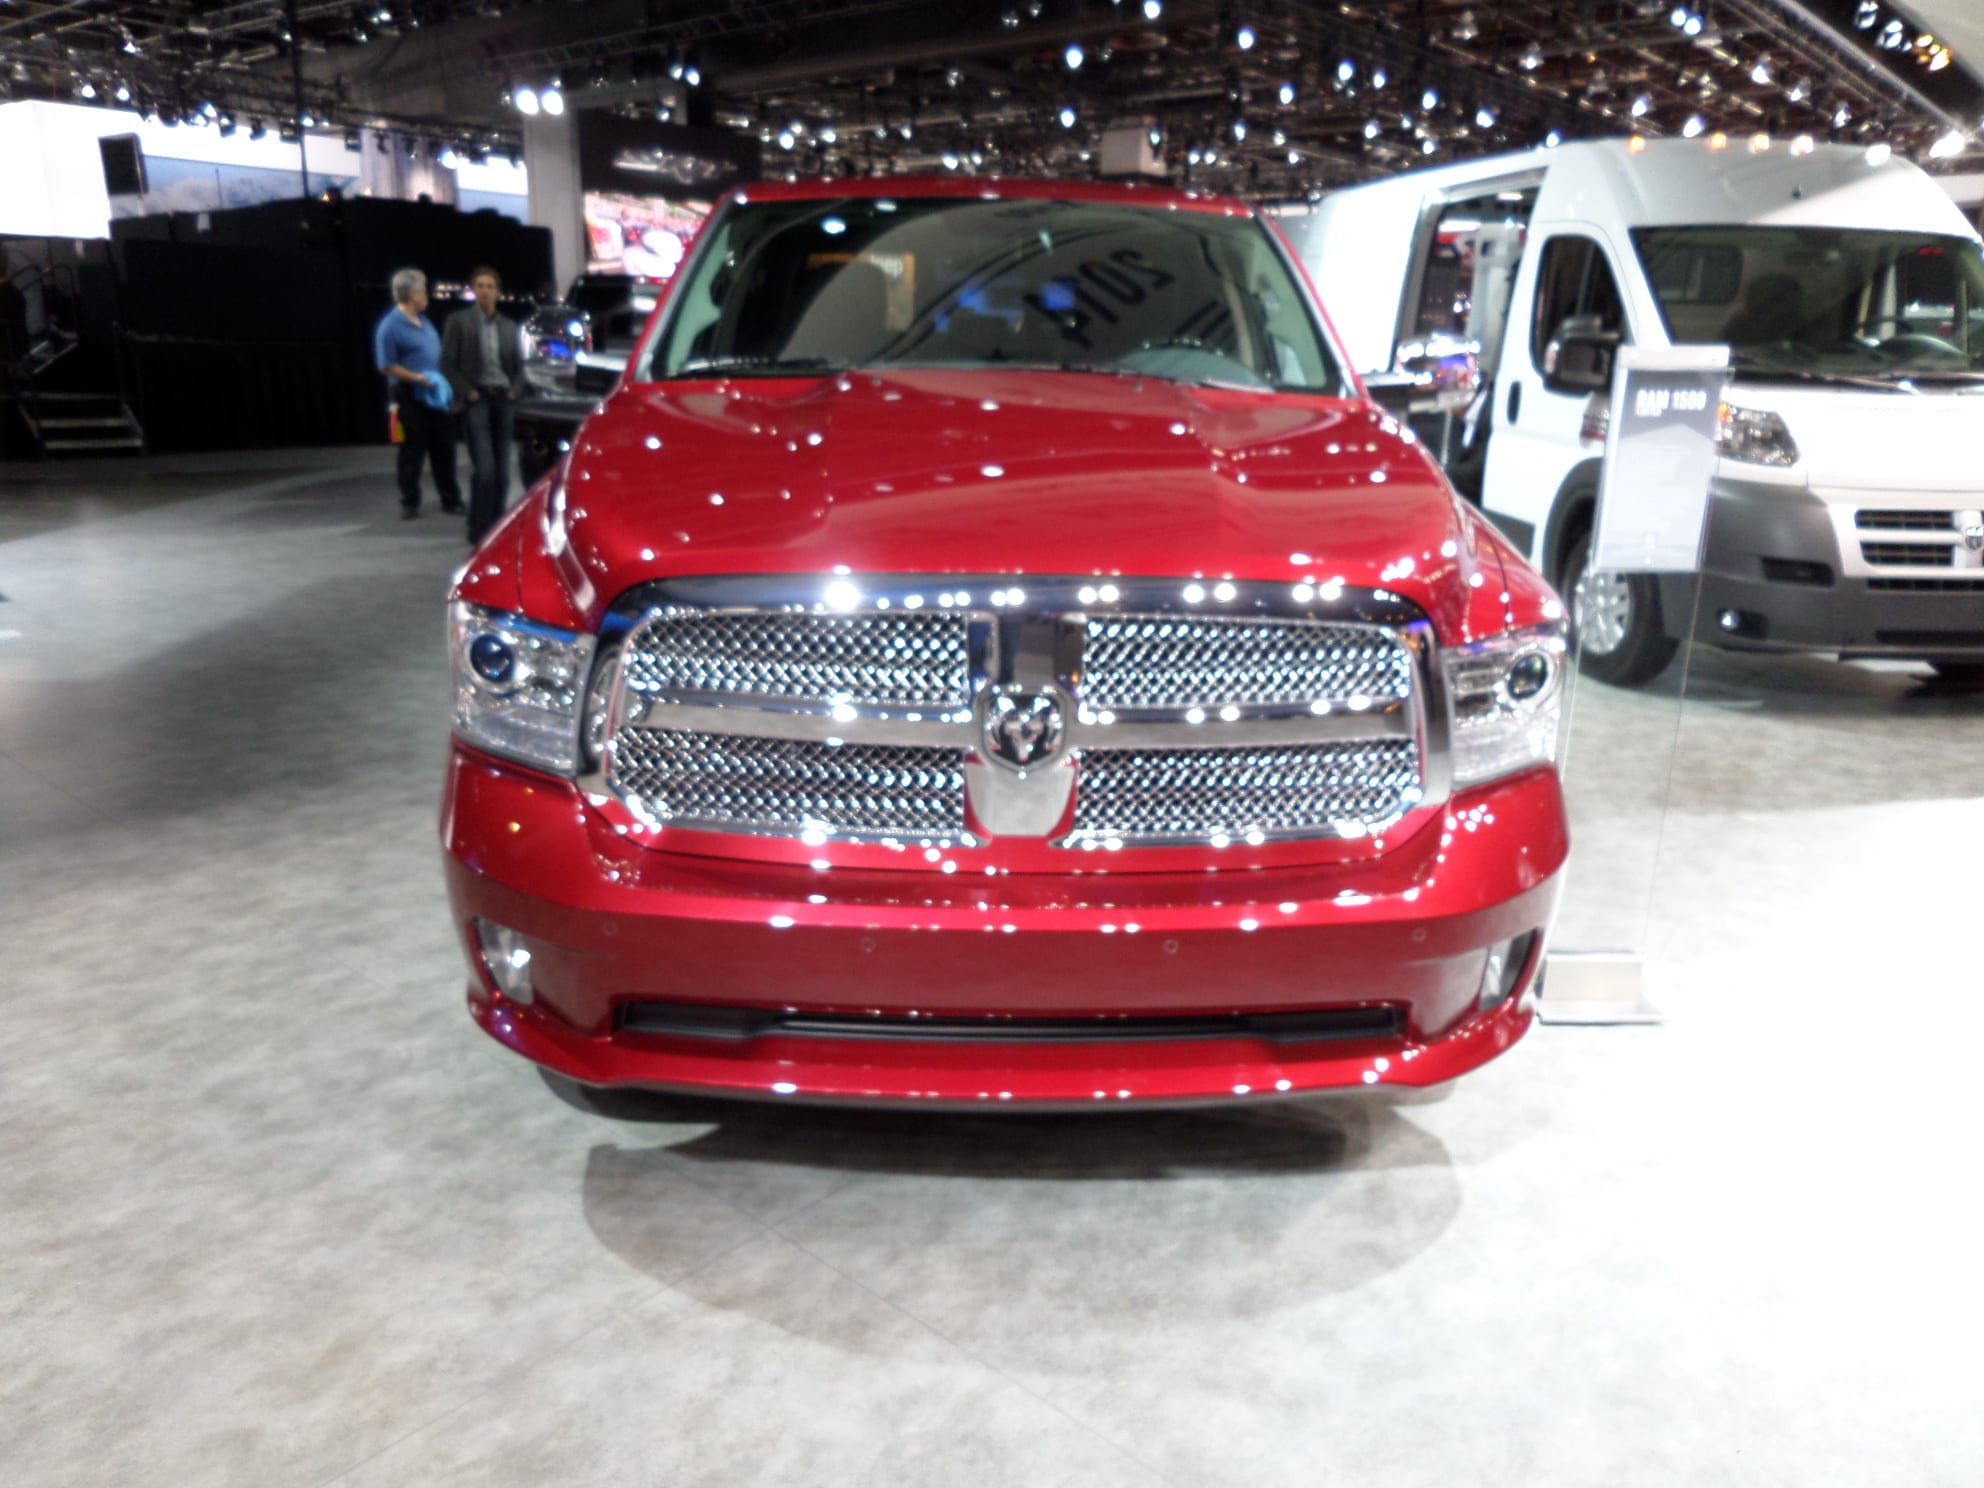 Red Dodge Ram pickup truck.